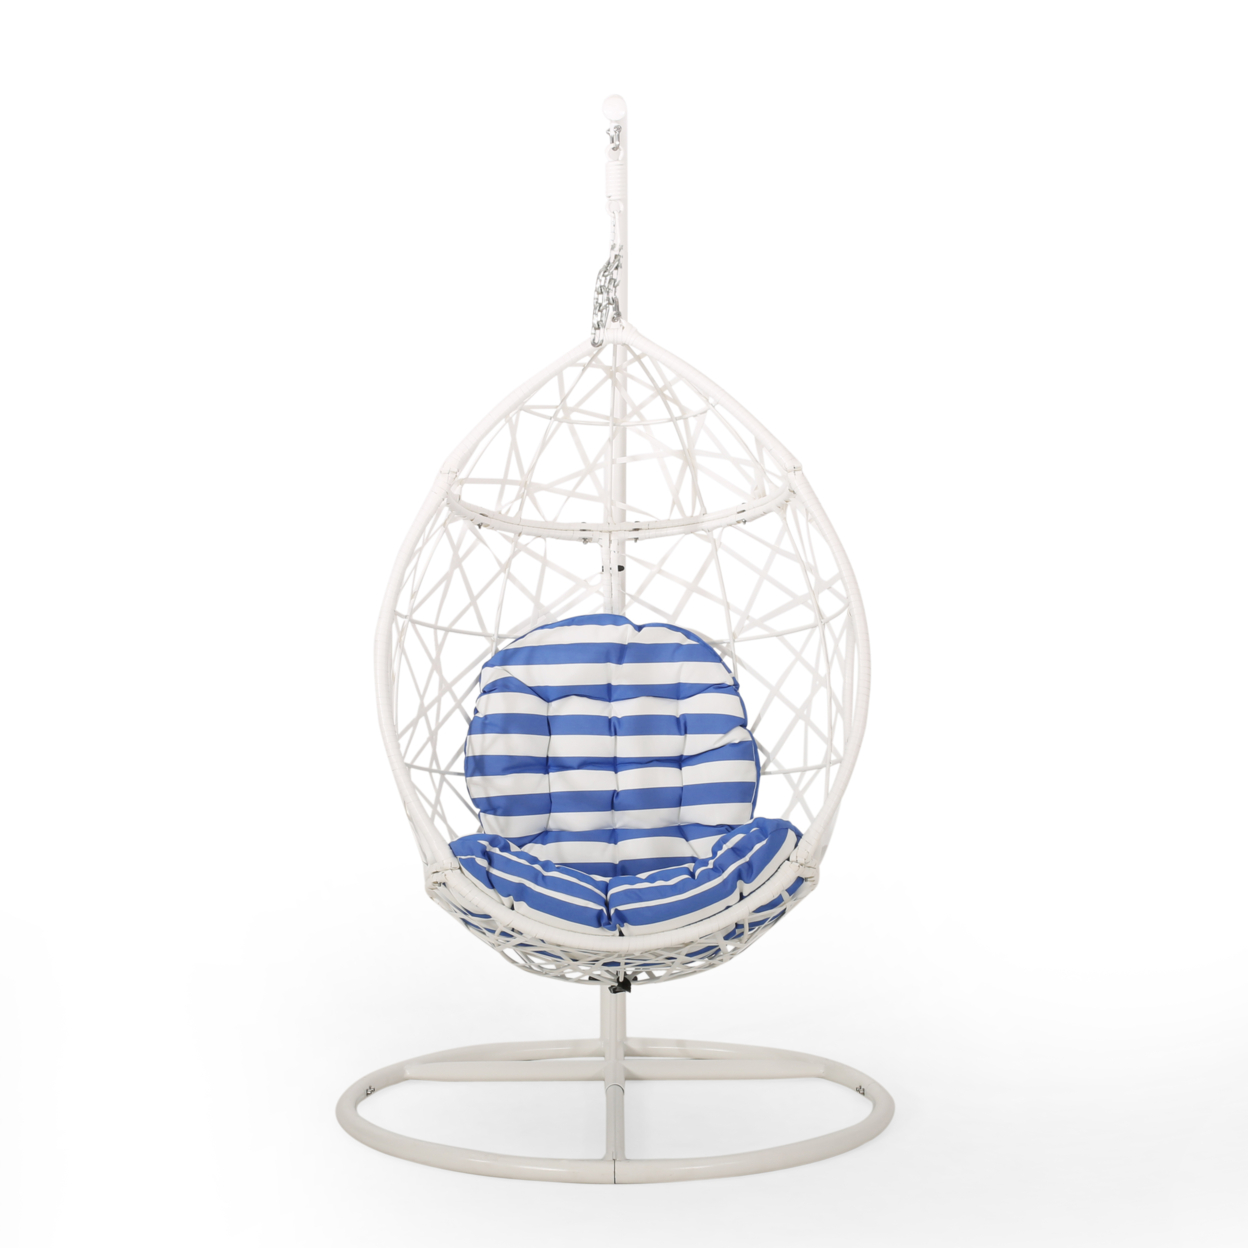 Berkley Outdoor Wicker Hanging Teardrop / Egg Chair - Blue/white